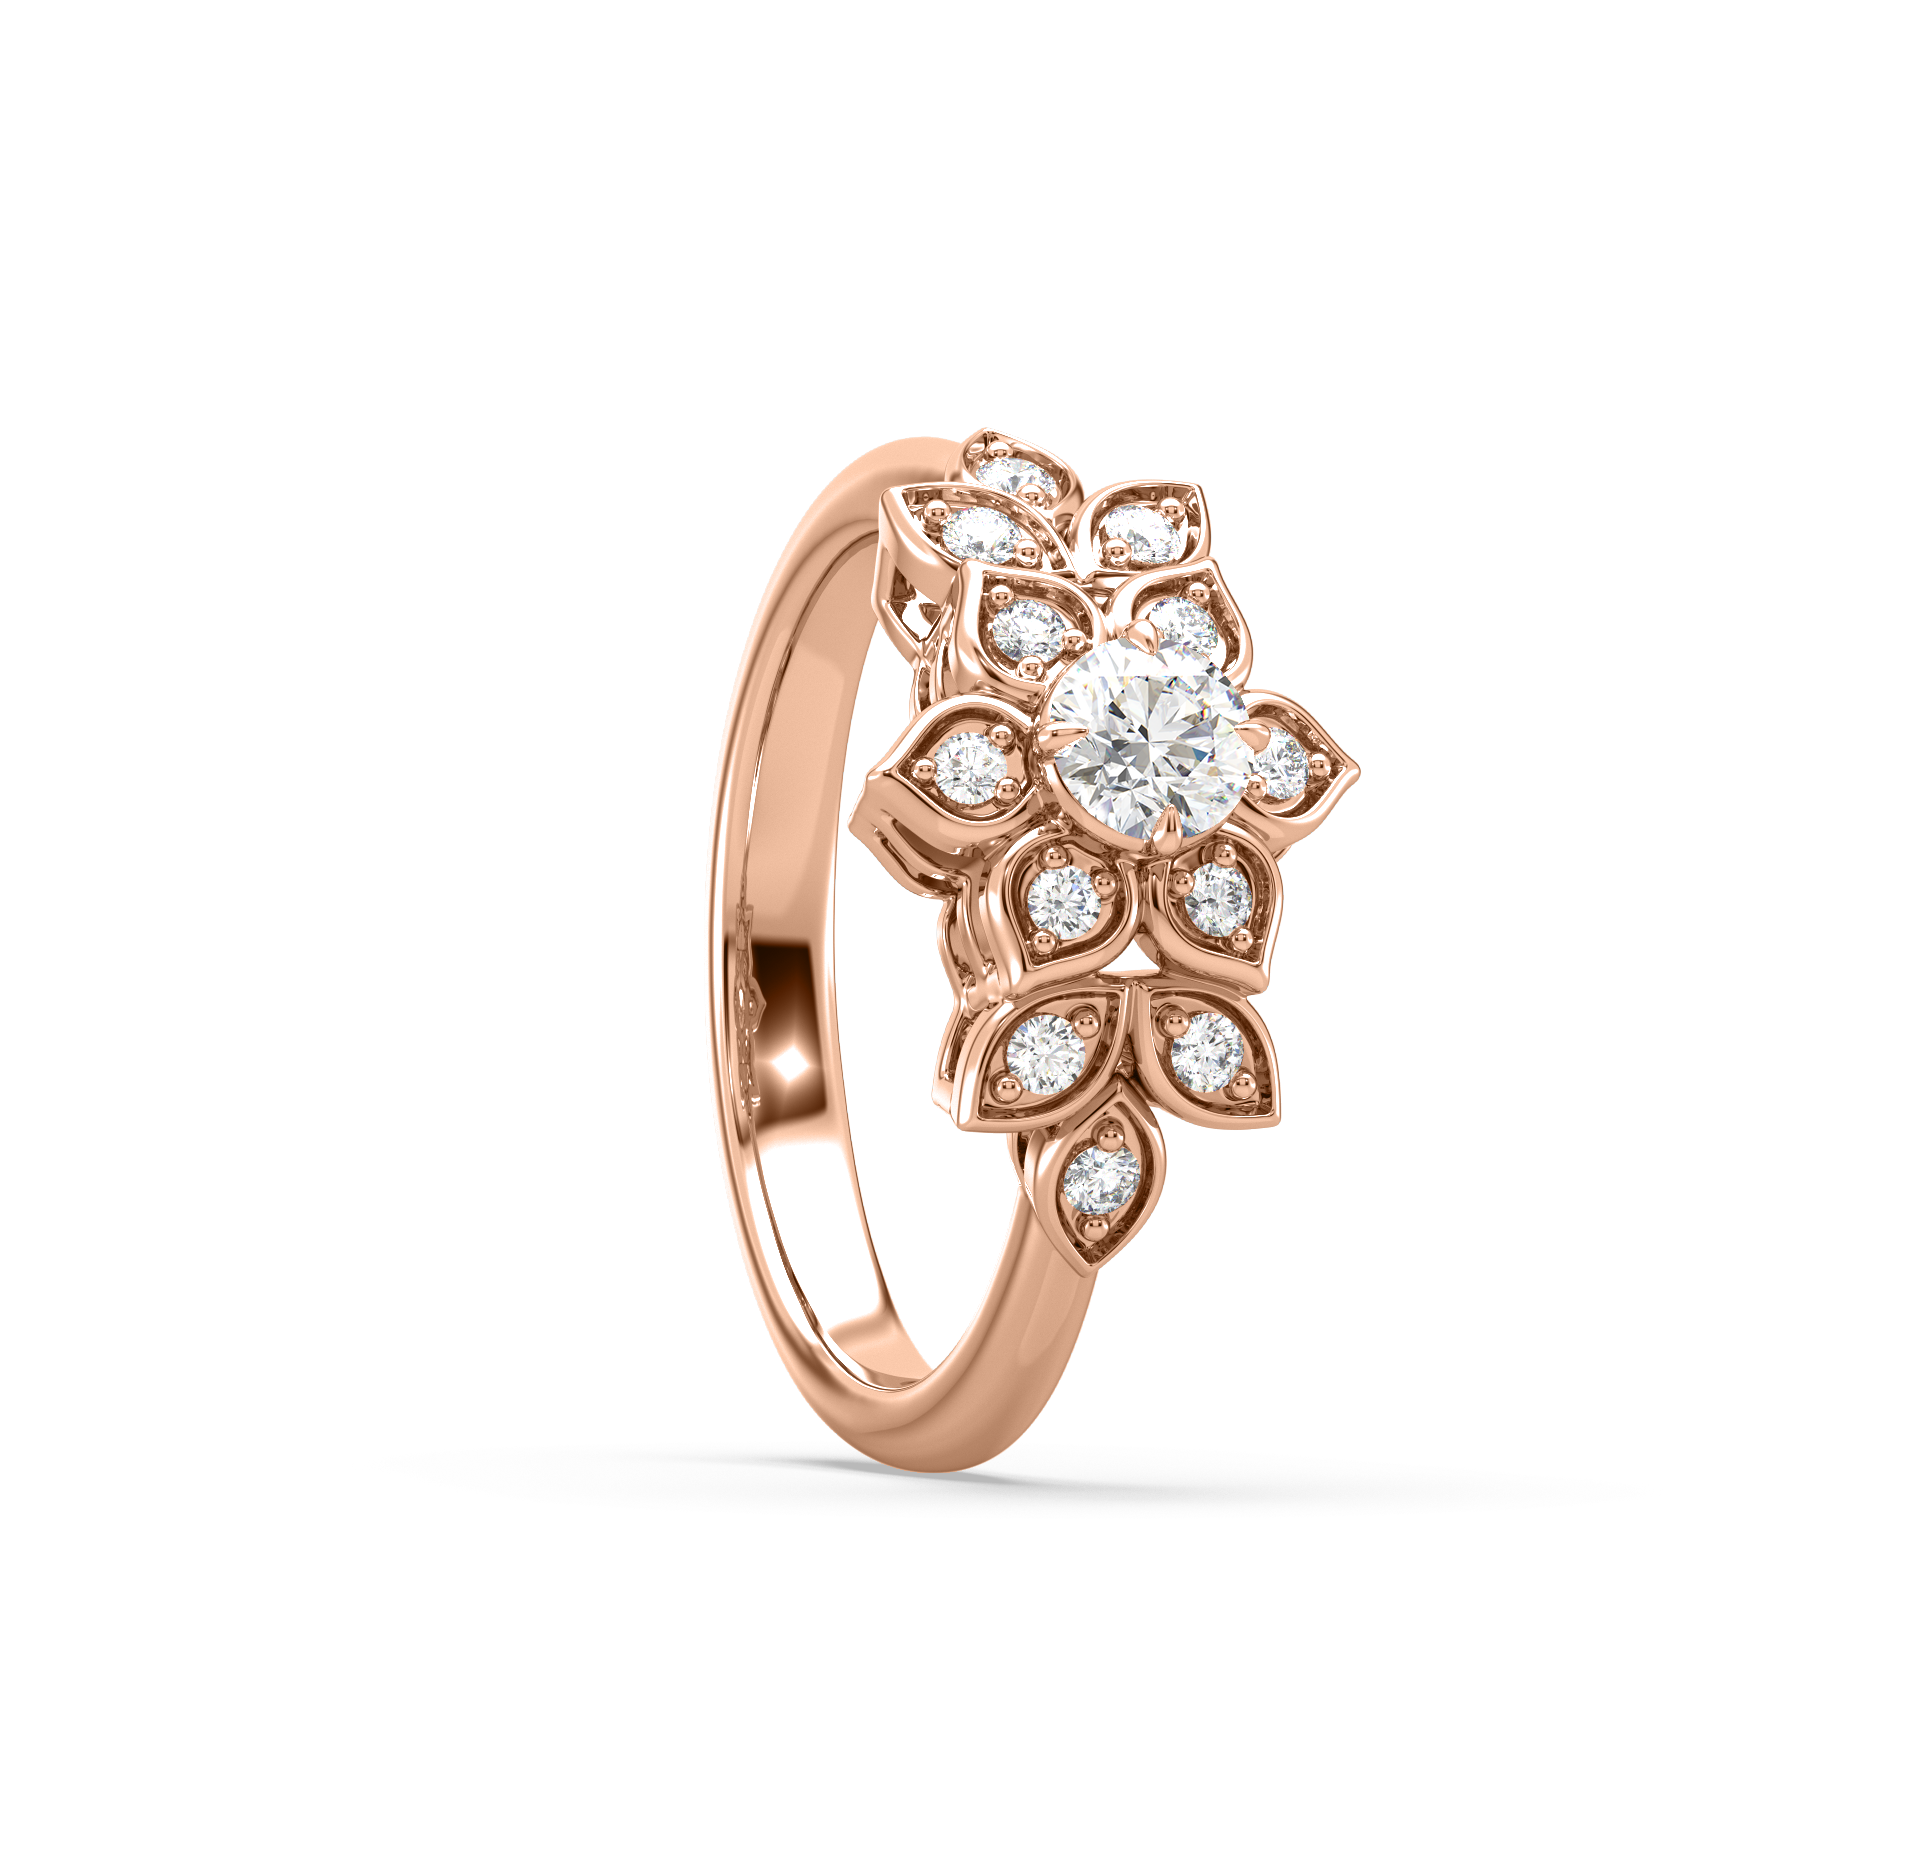 Valentina Ornate Diamond Ring